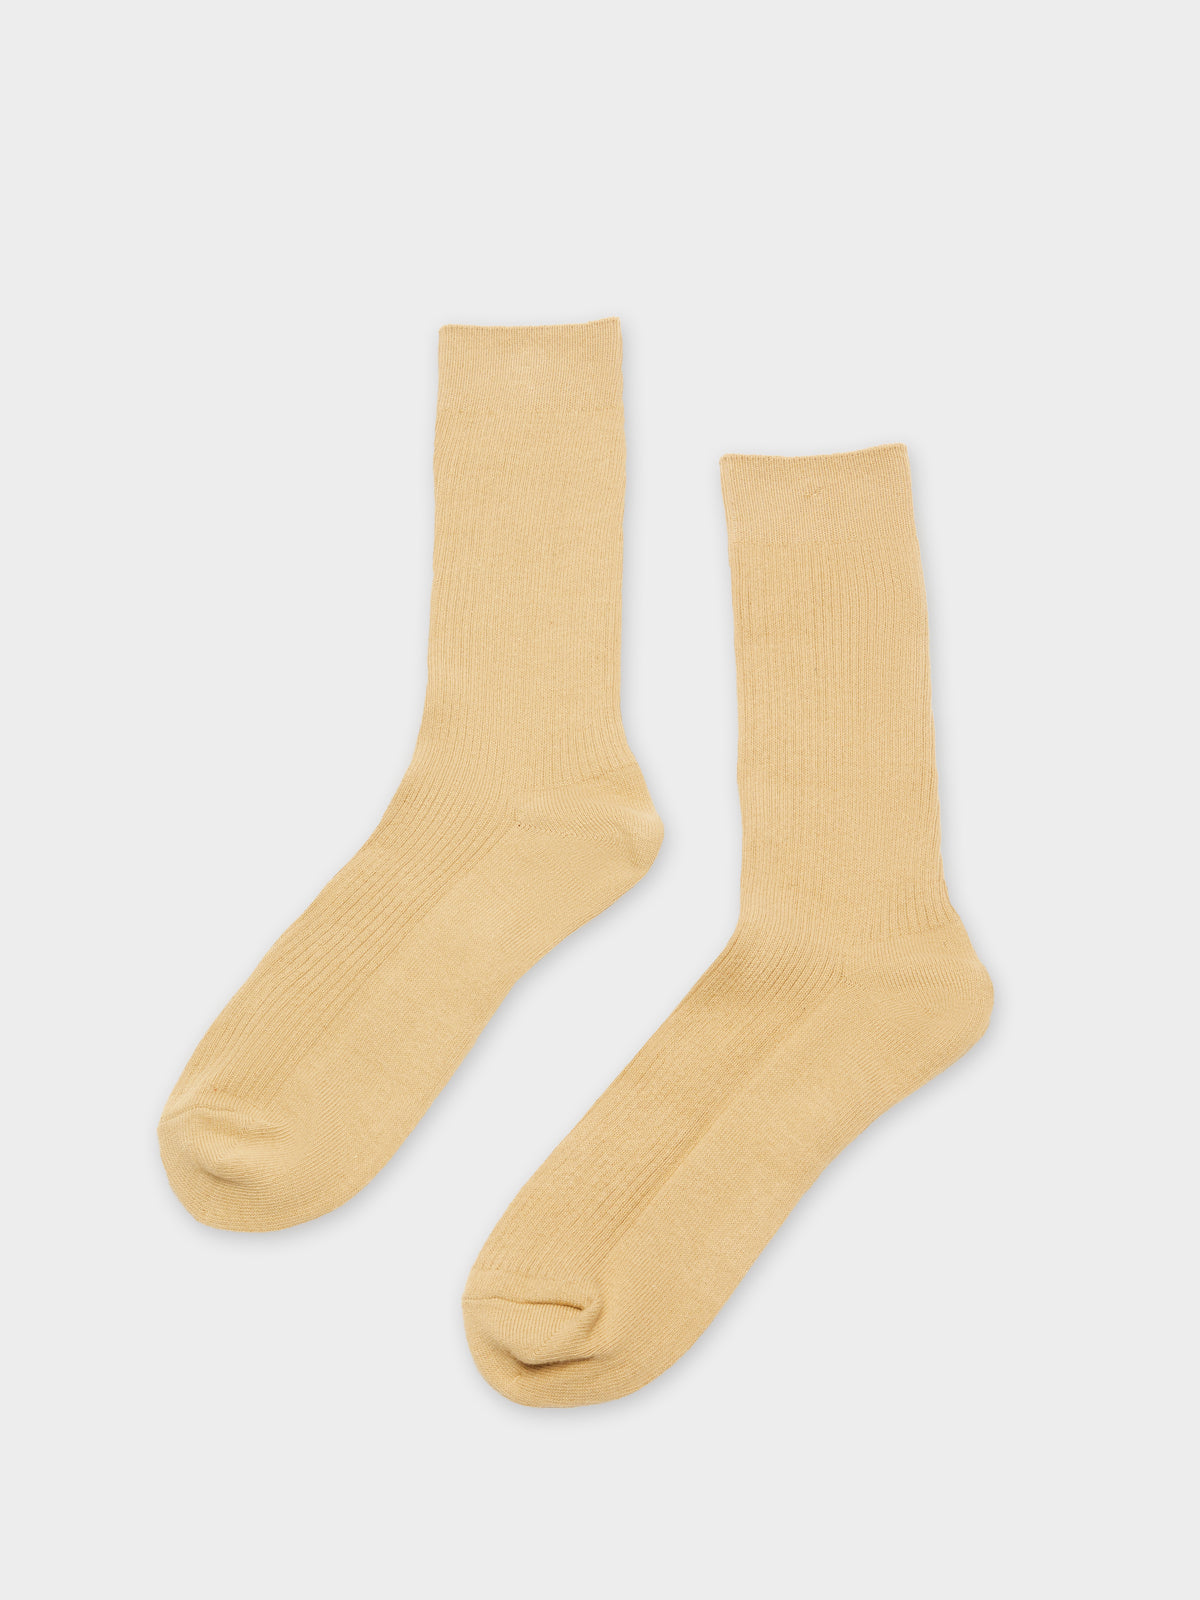 1 Pair of Everyday Socks in Macadamia